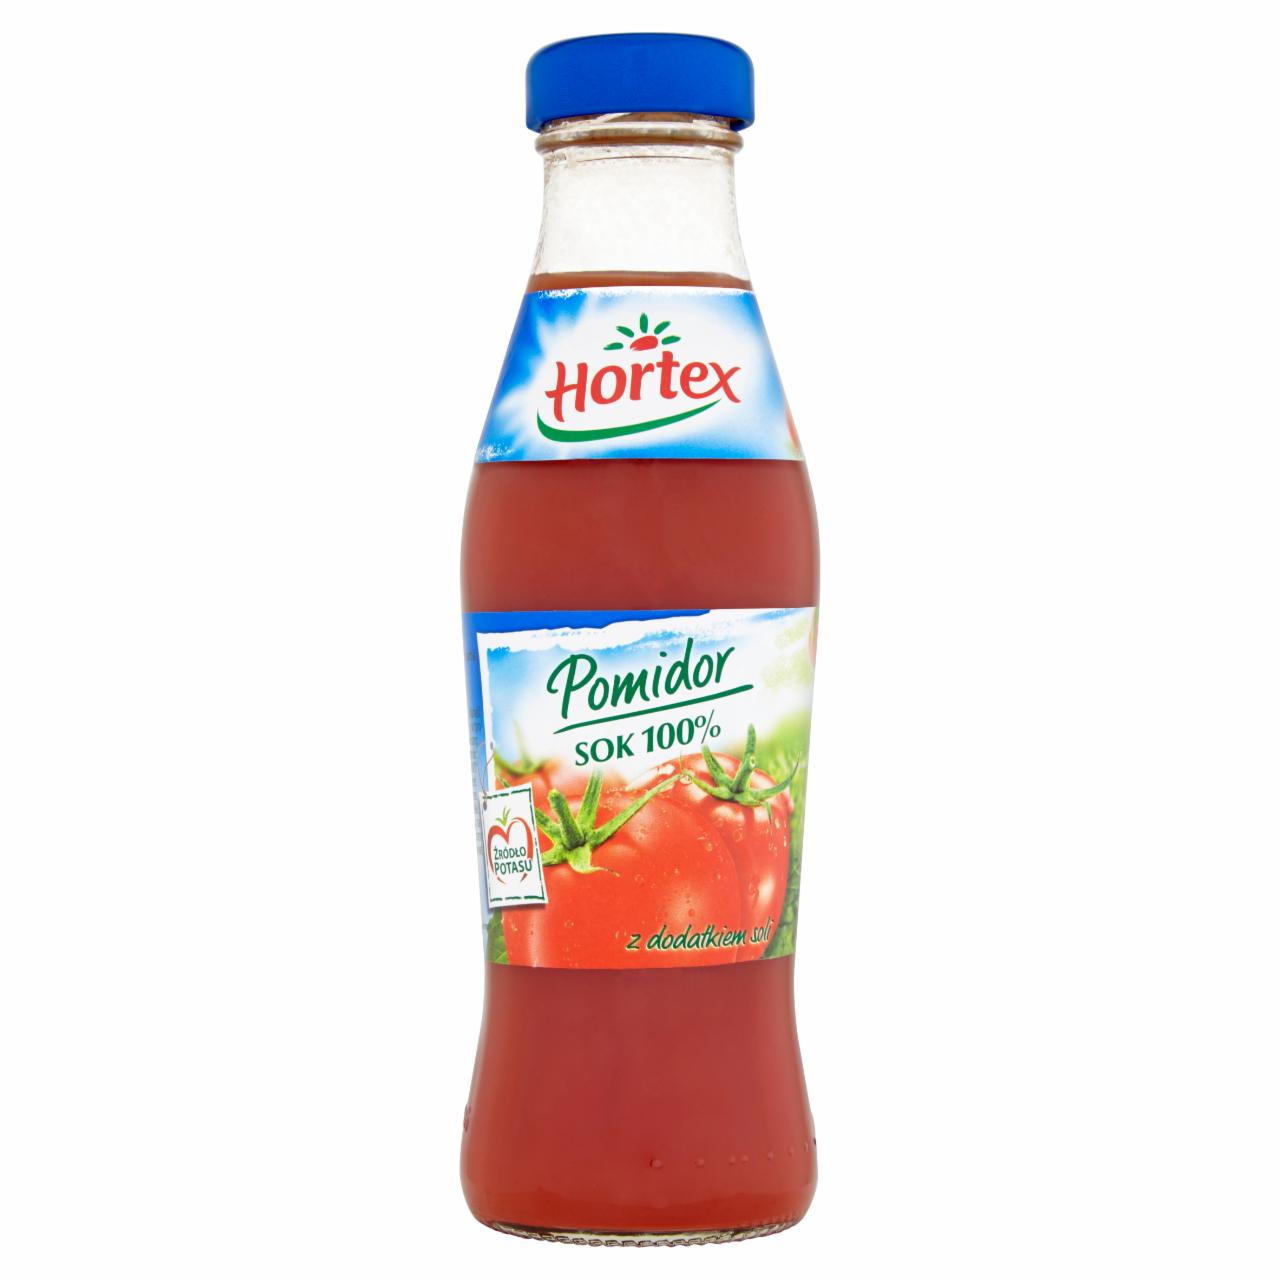 Zdjęcia - Hortex Pomidor Sok 100% 250 ml